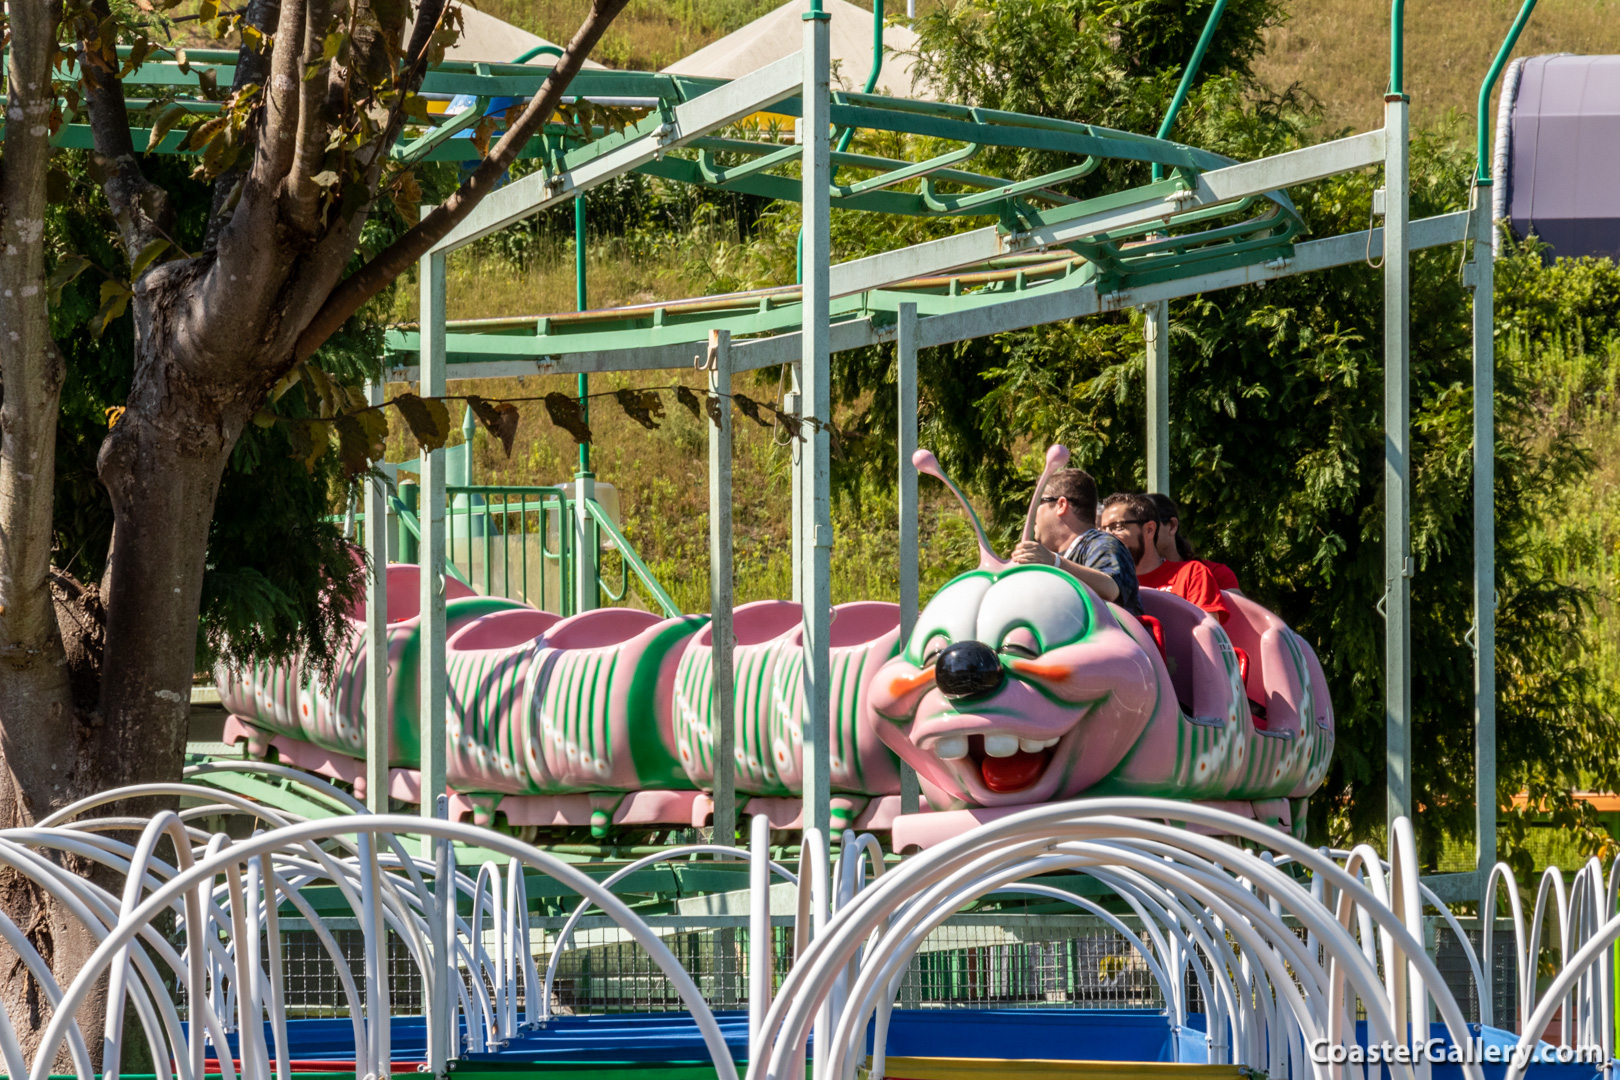 Imorinth roller coaster at Himeji Central Park